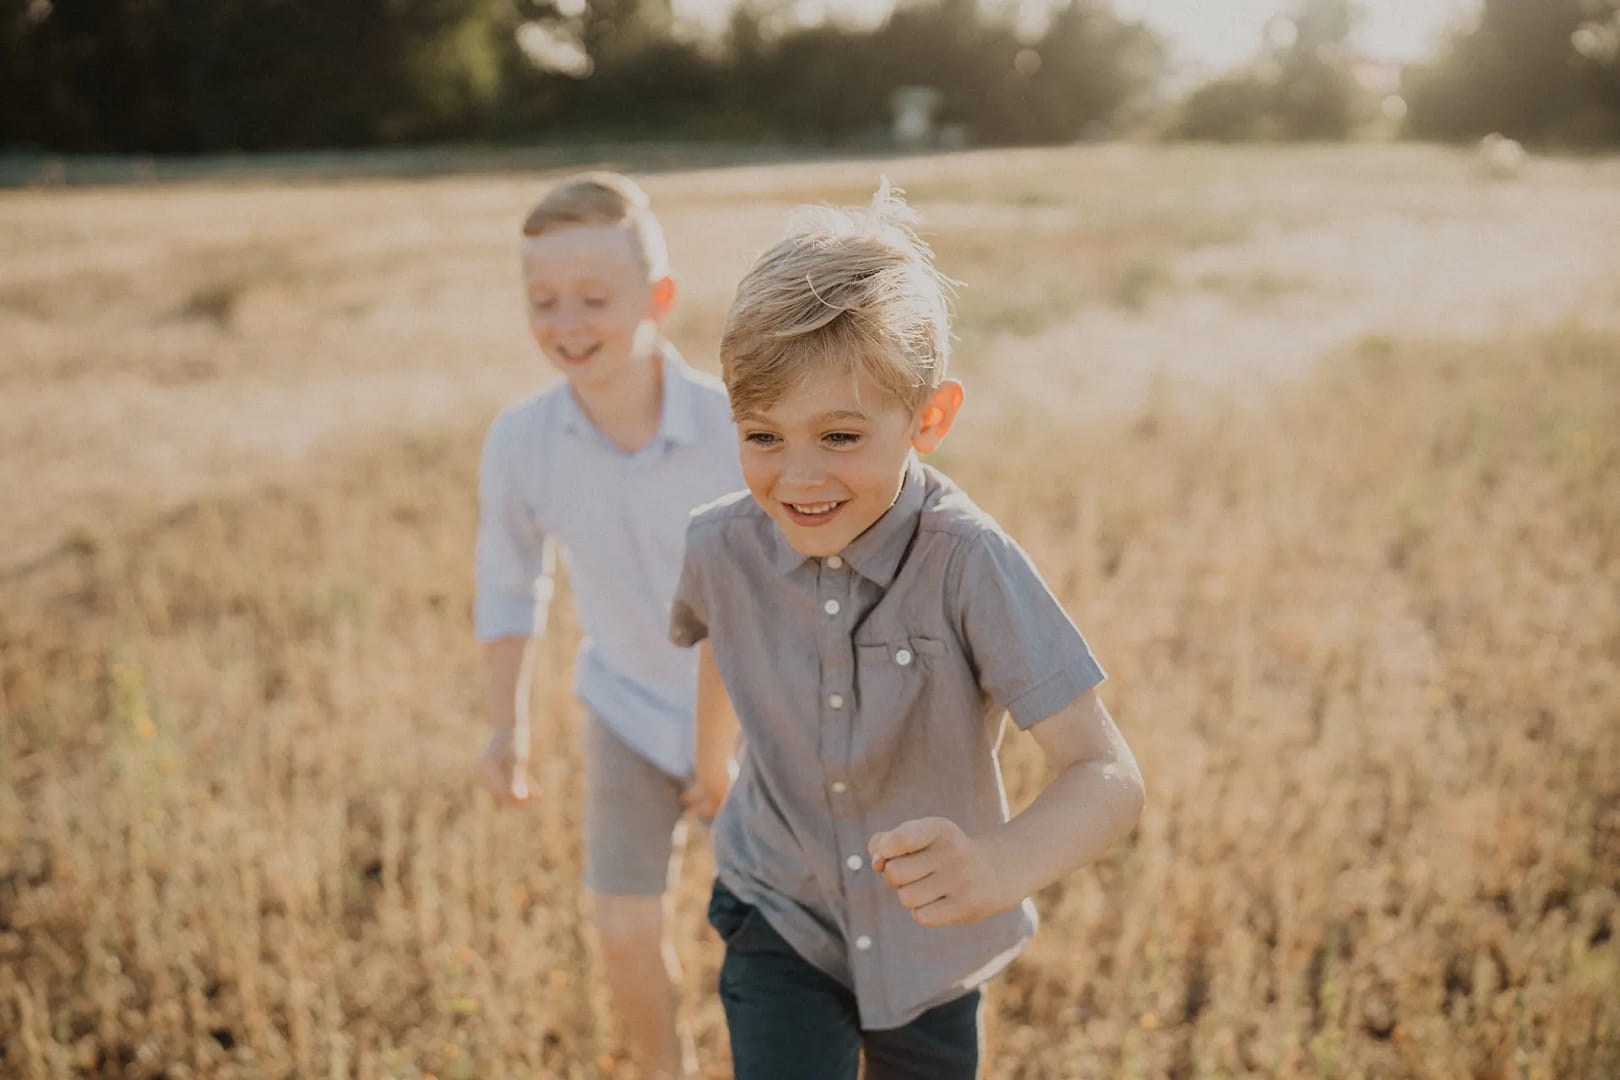 Two boys running through a sunny field